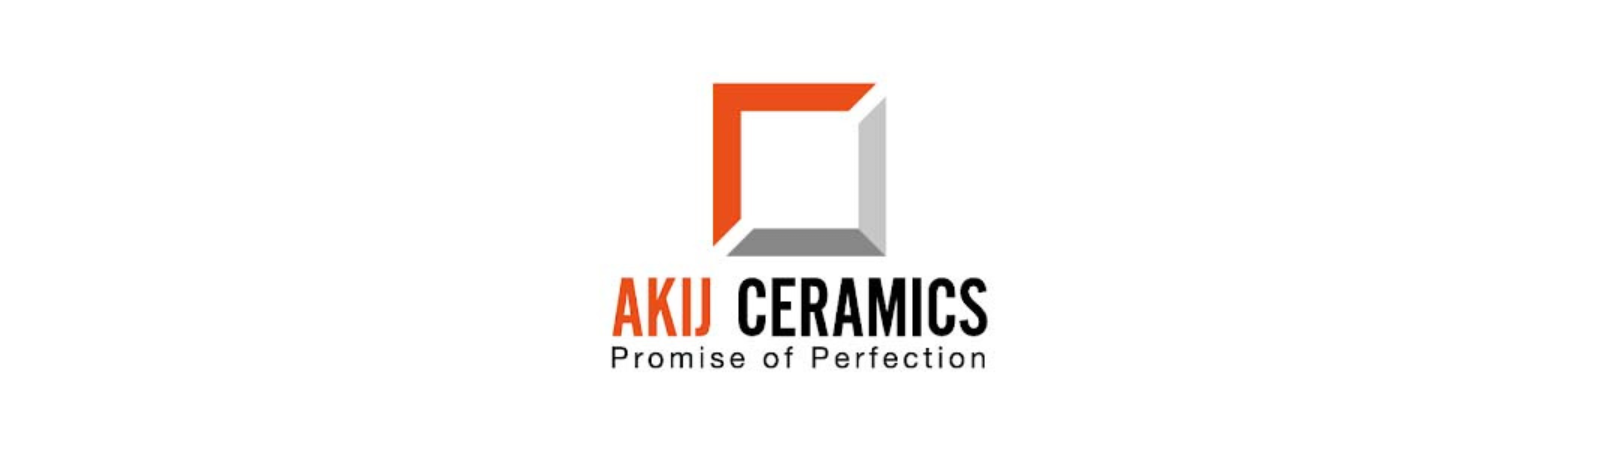 Akij Bangladesh expands tableware production with SACMI-Riedhammer